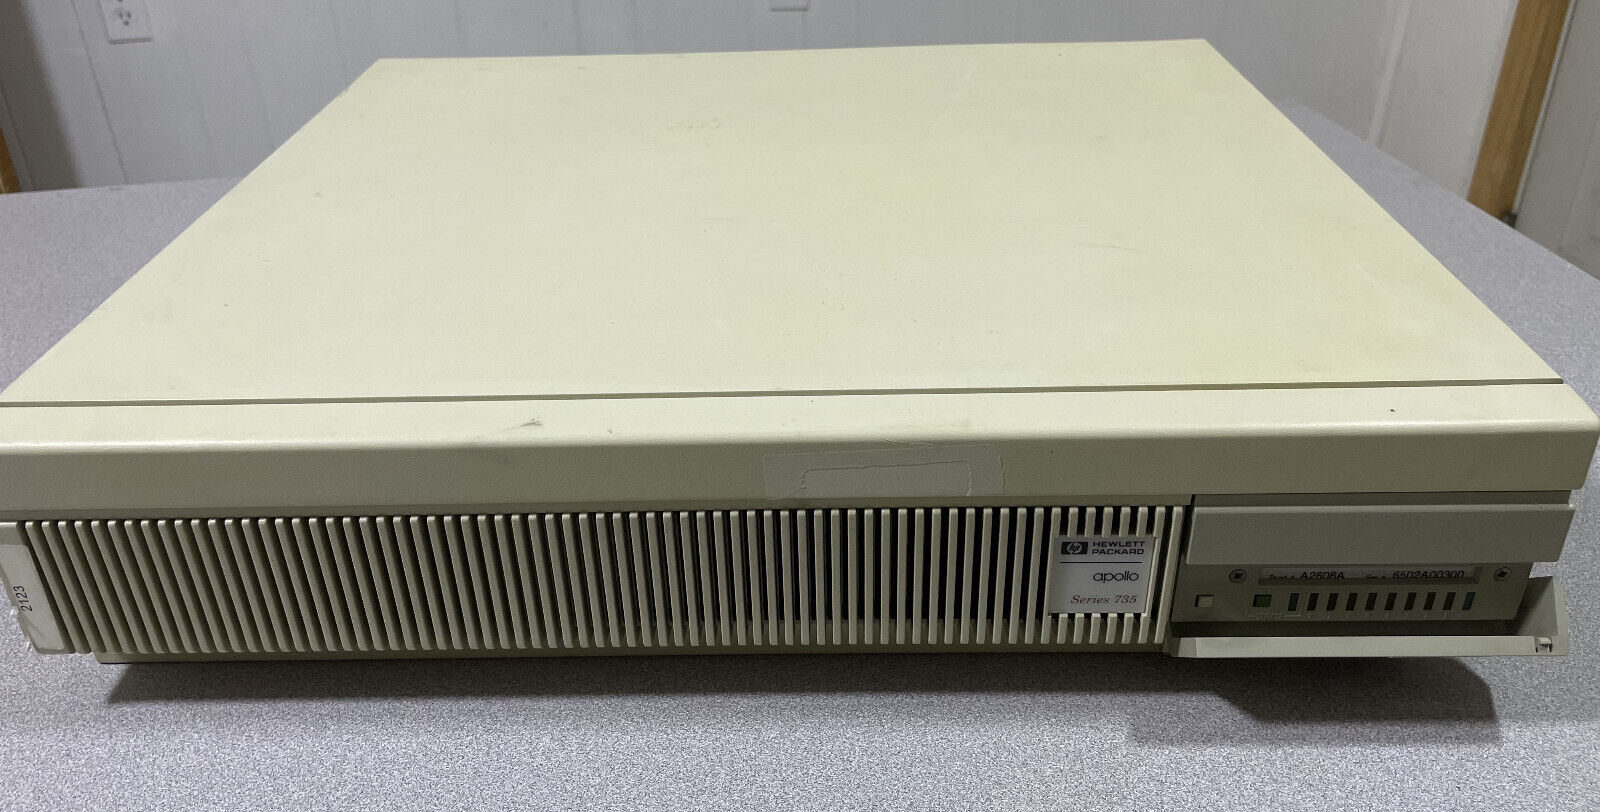 HP 9000 735/125 Workstation A4053A HP-UX UNIX